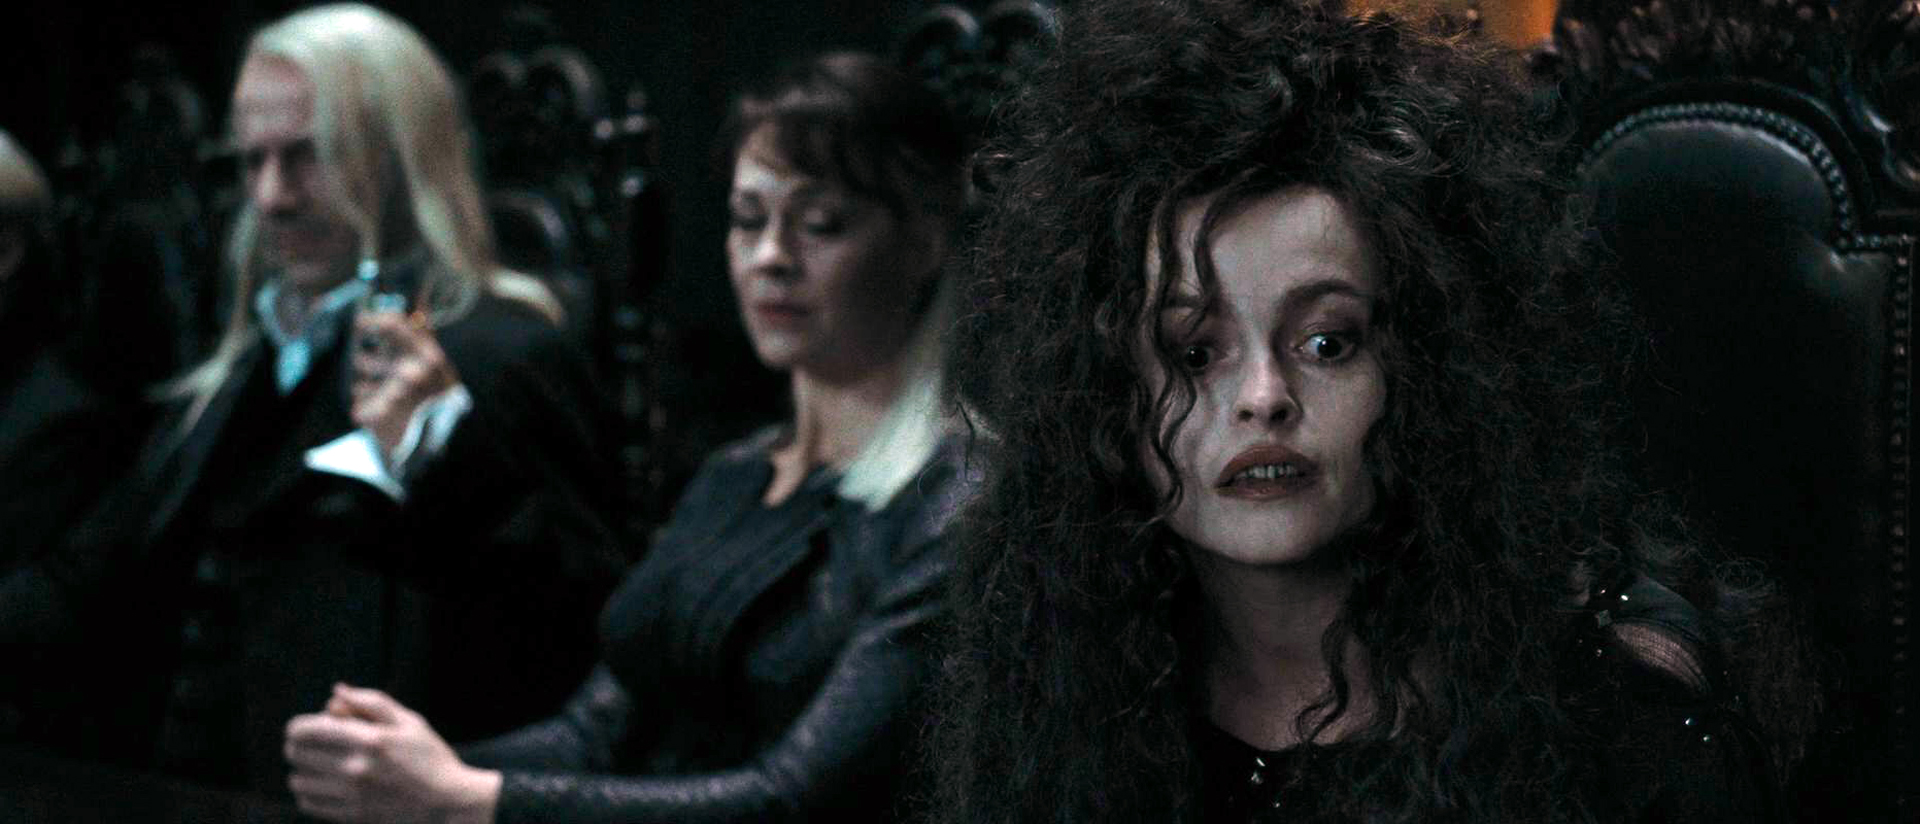 Image - DH1 Lucius Malfoy, Narcissa Malfoy and Bellatrix Lestrange.jpg - Harry Potter Wiki1920 x 824